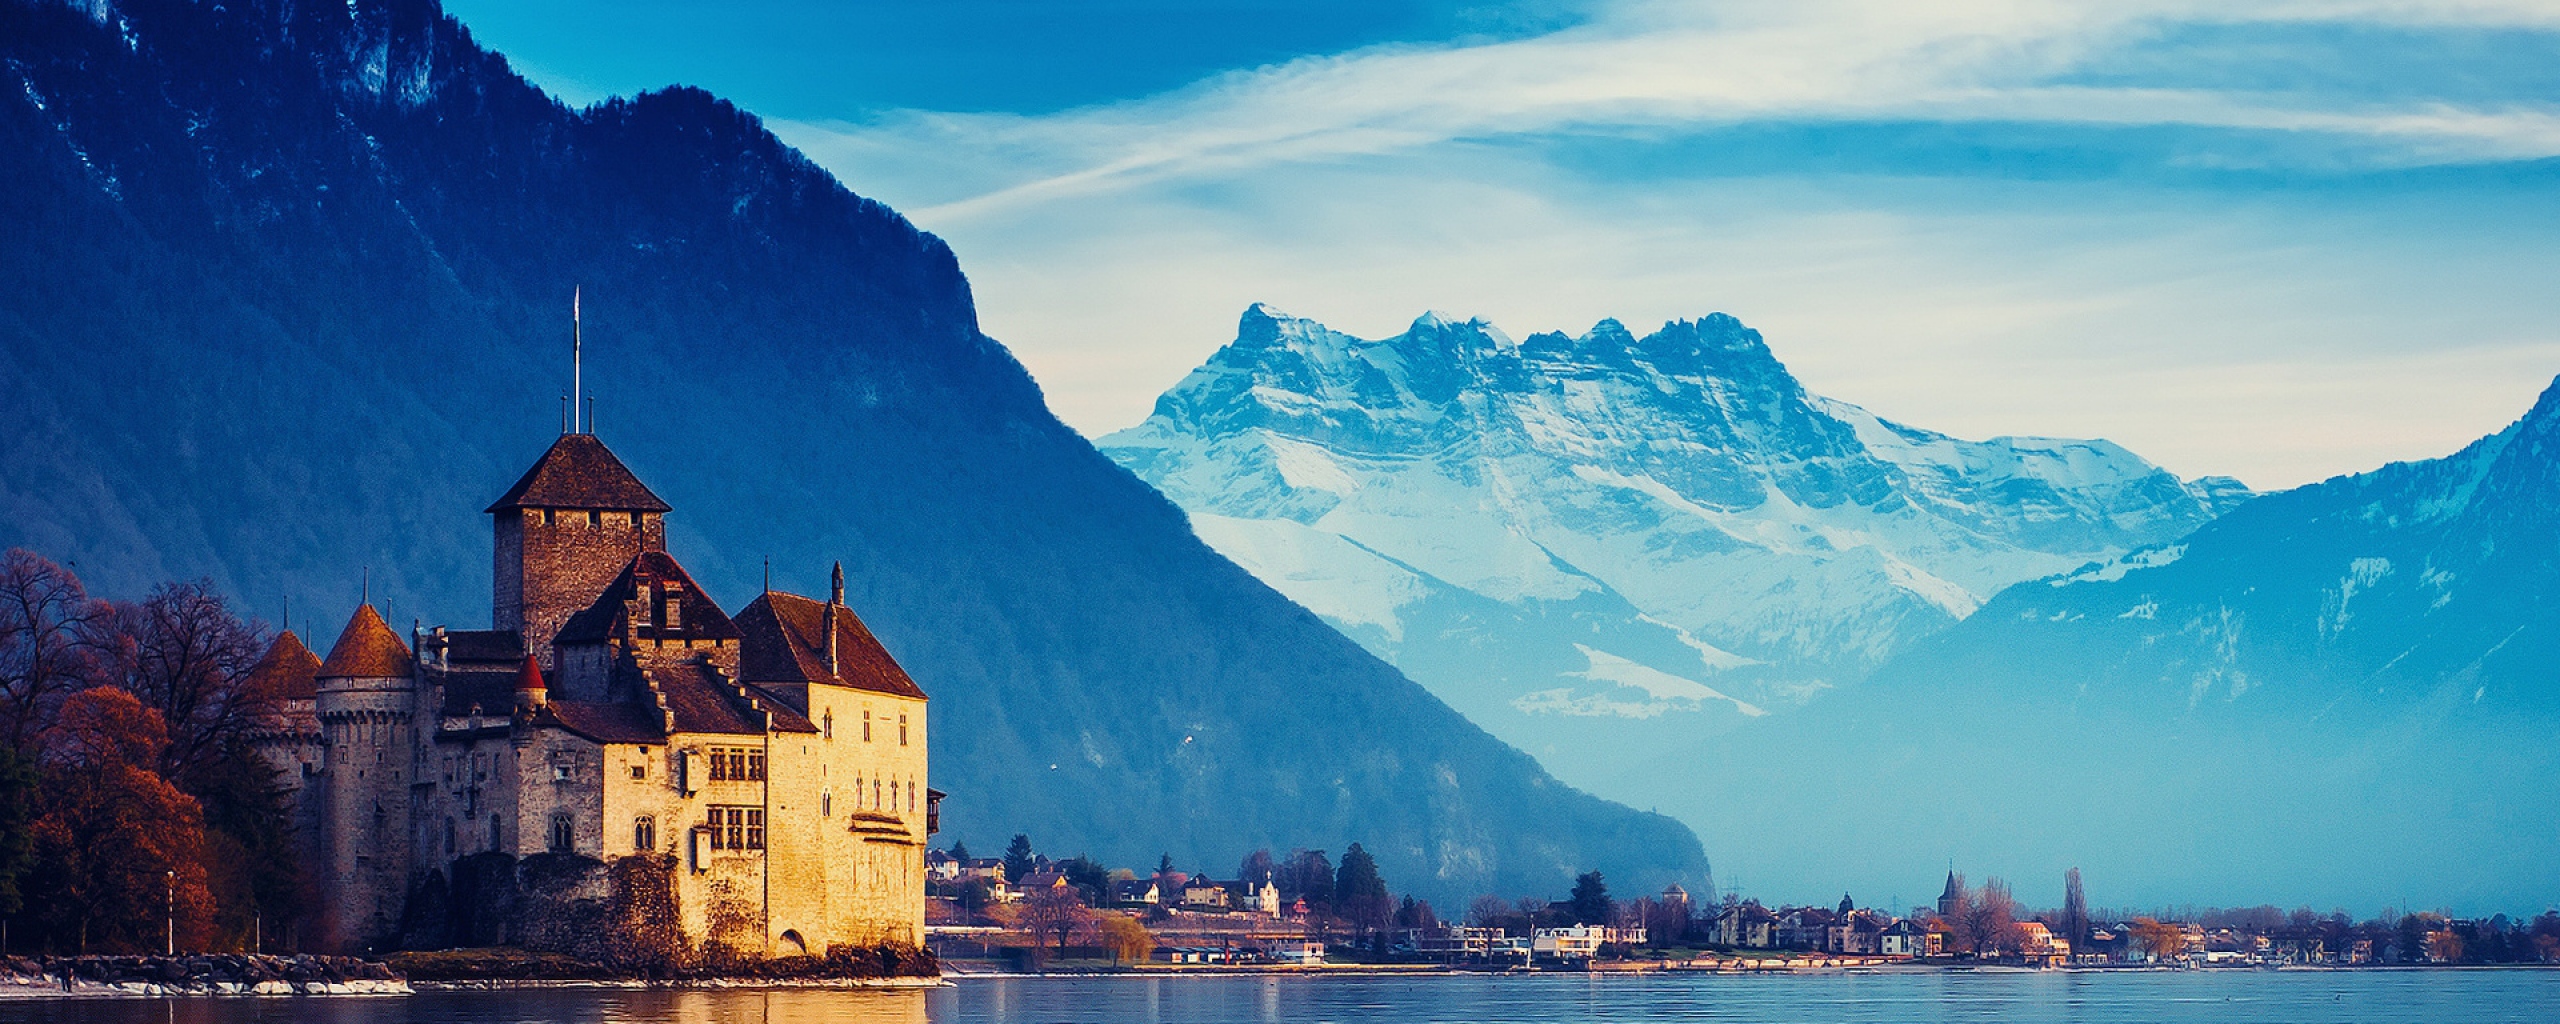 Switzerland Wallpaper Your Favourite HD